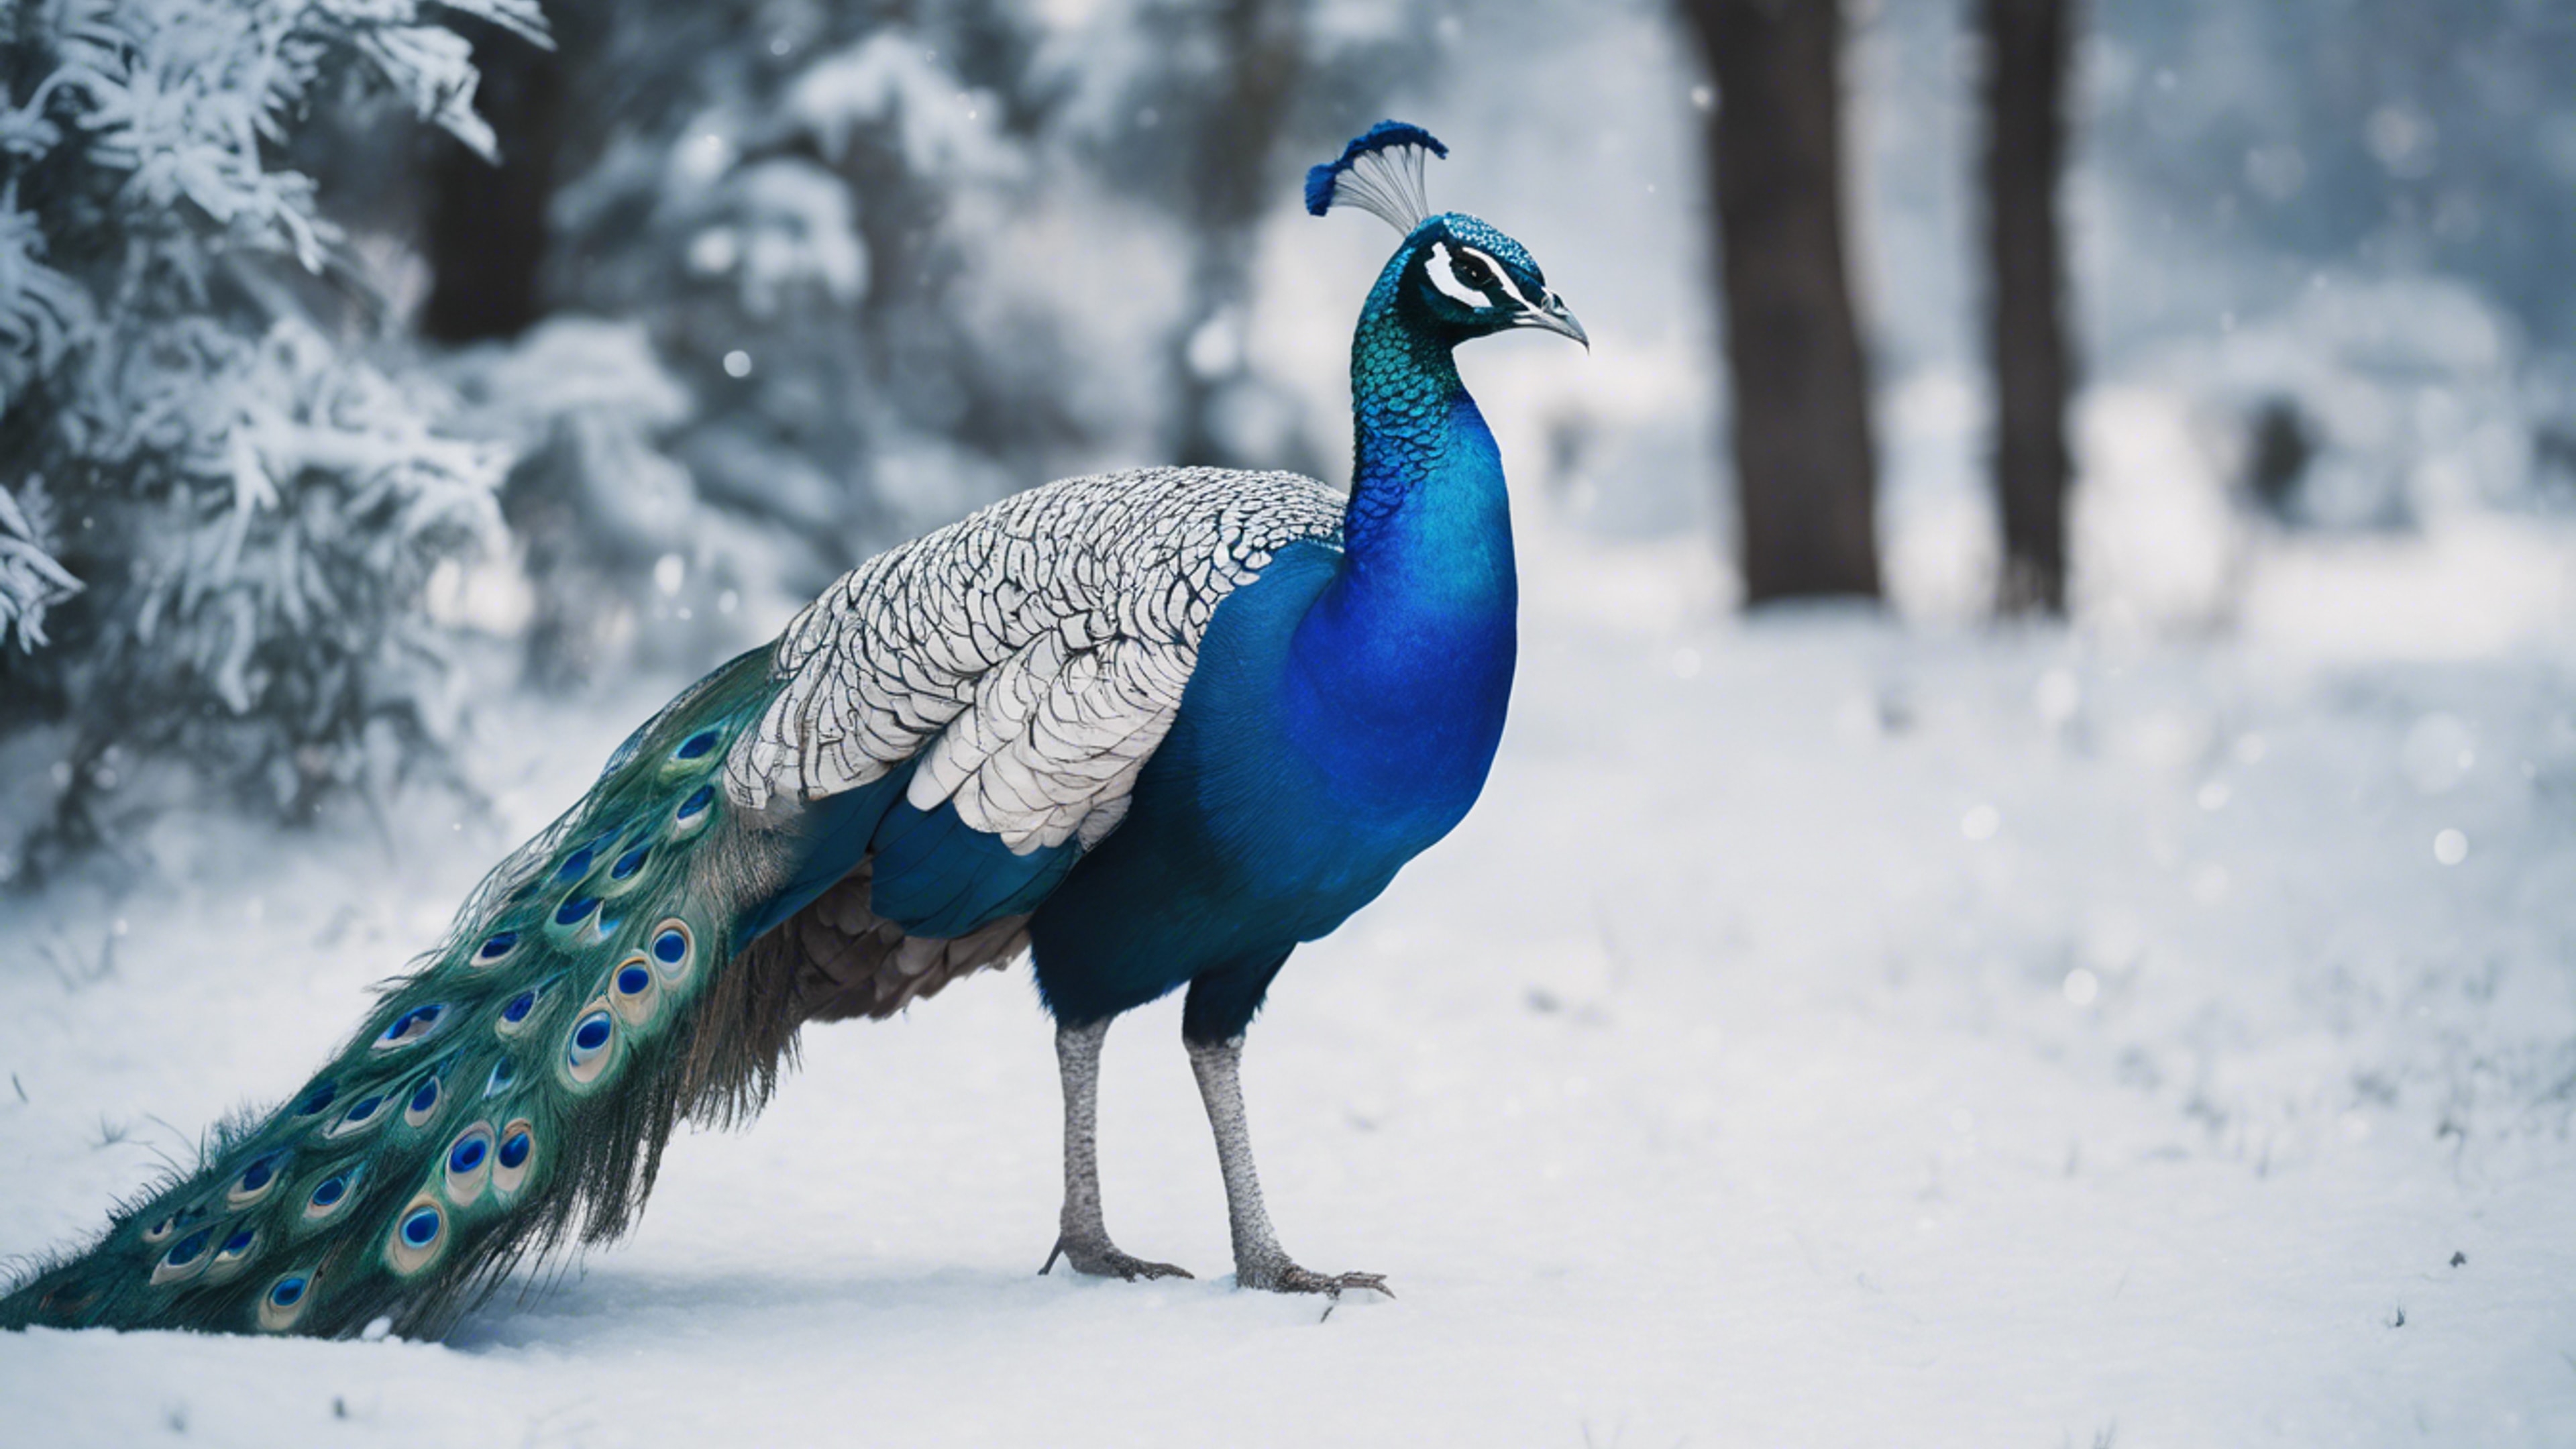 An azure blue peacock with a stunning white crest roaming in a winter wonderland. Hintergrund[75d8e926bbf547baa433]